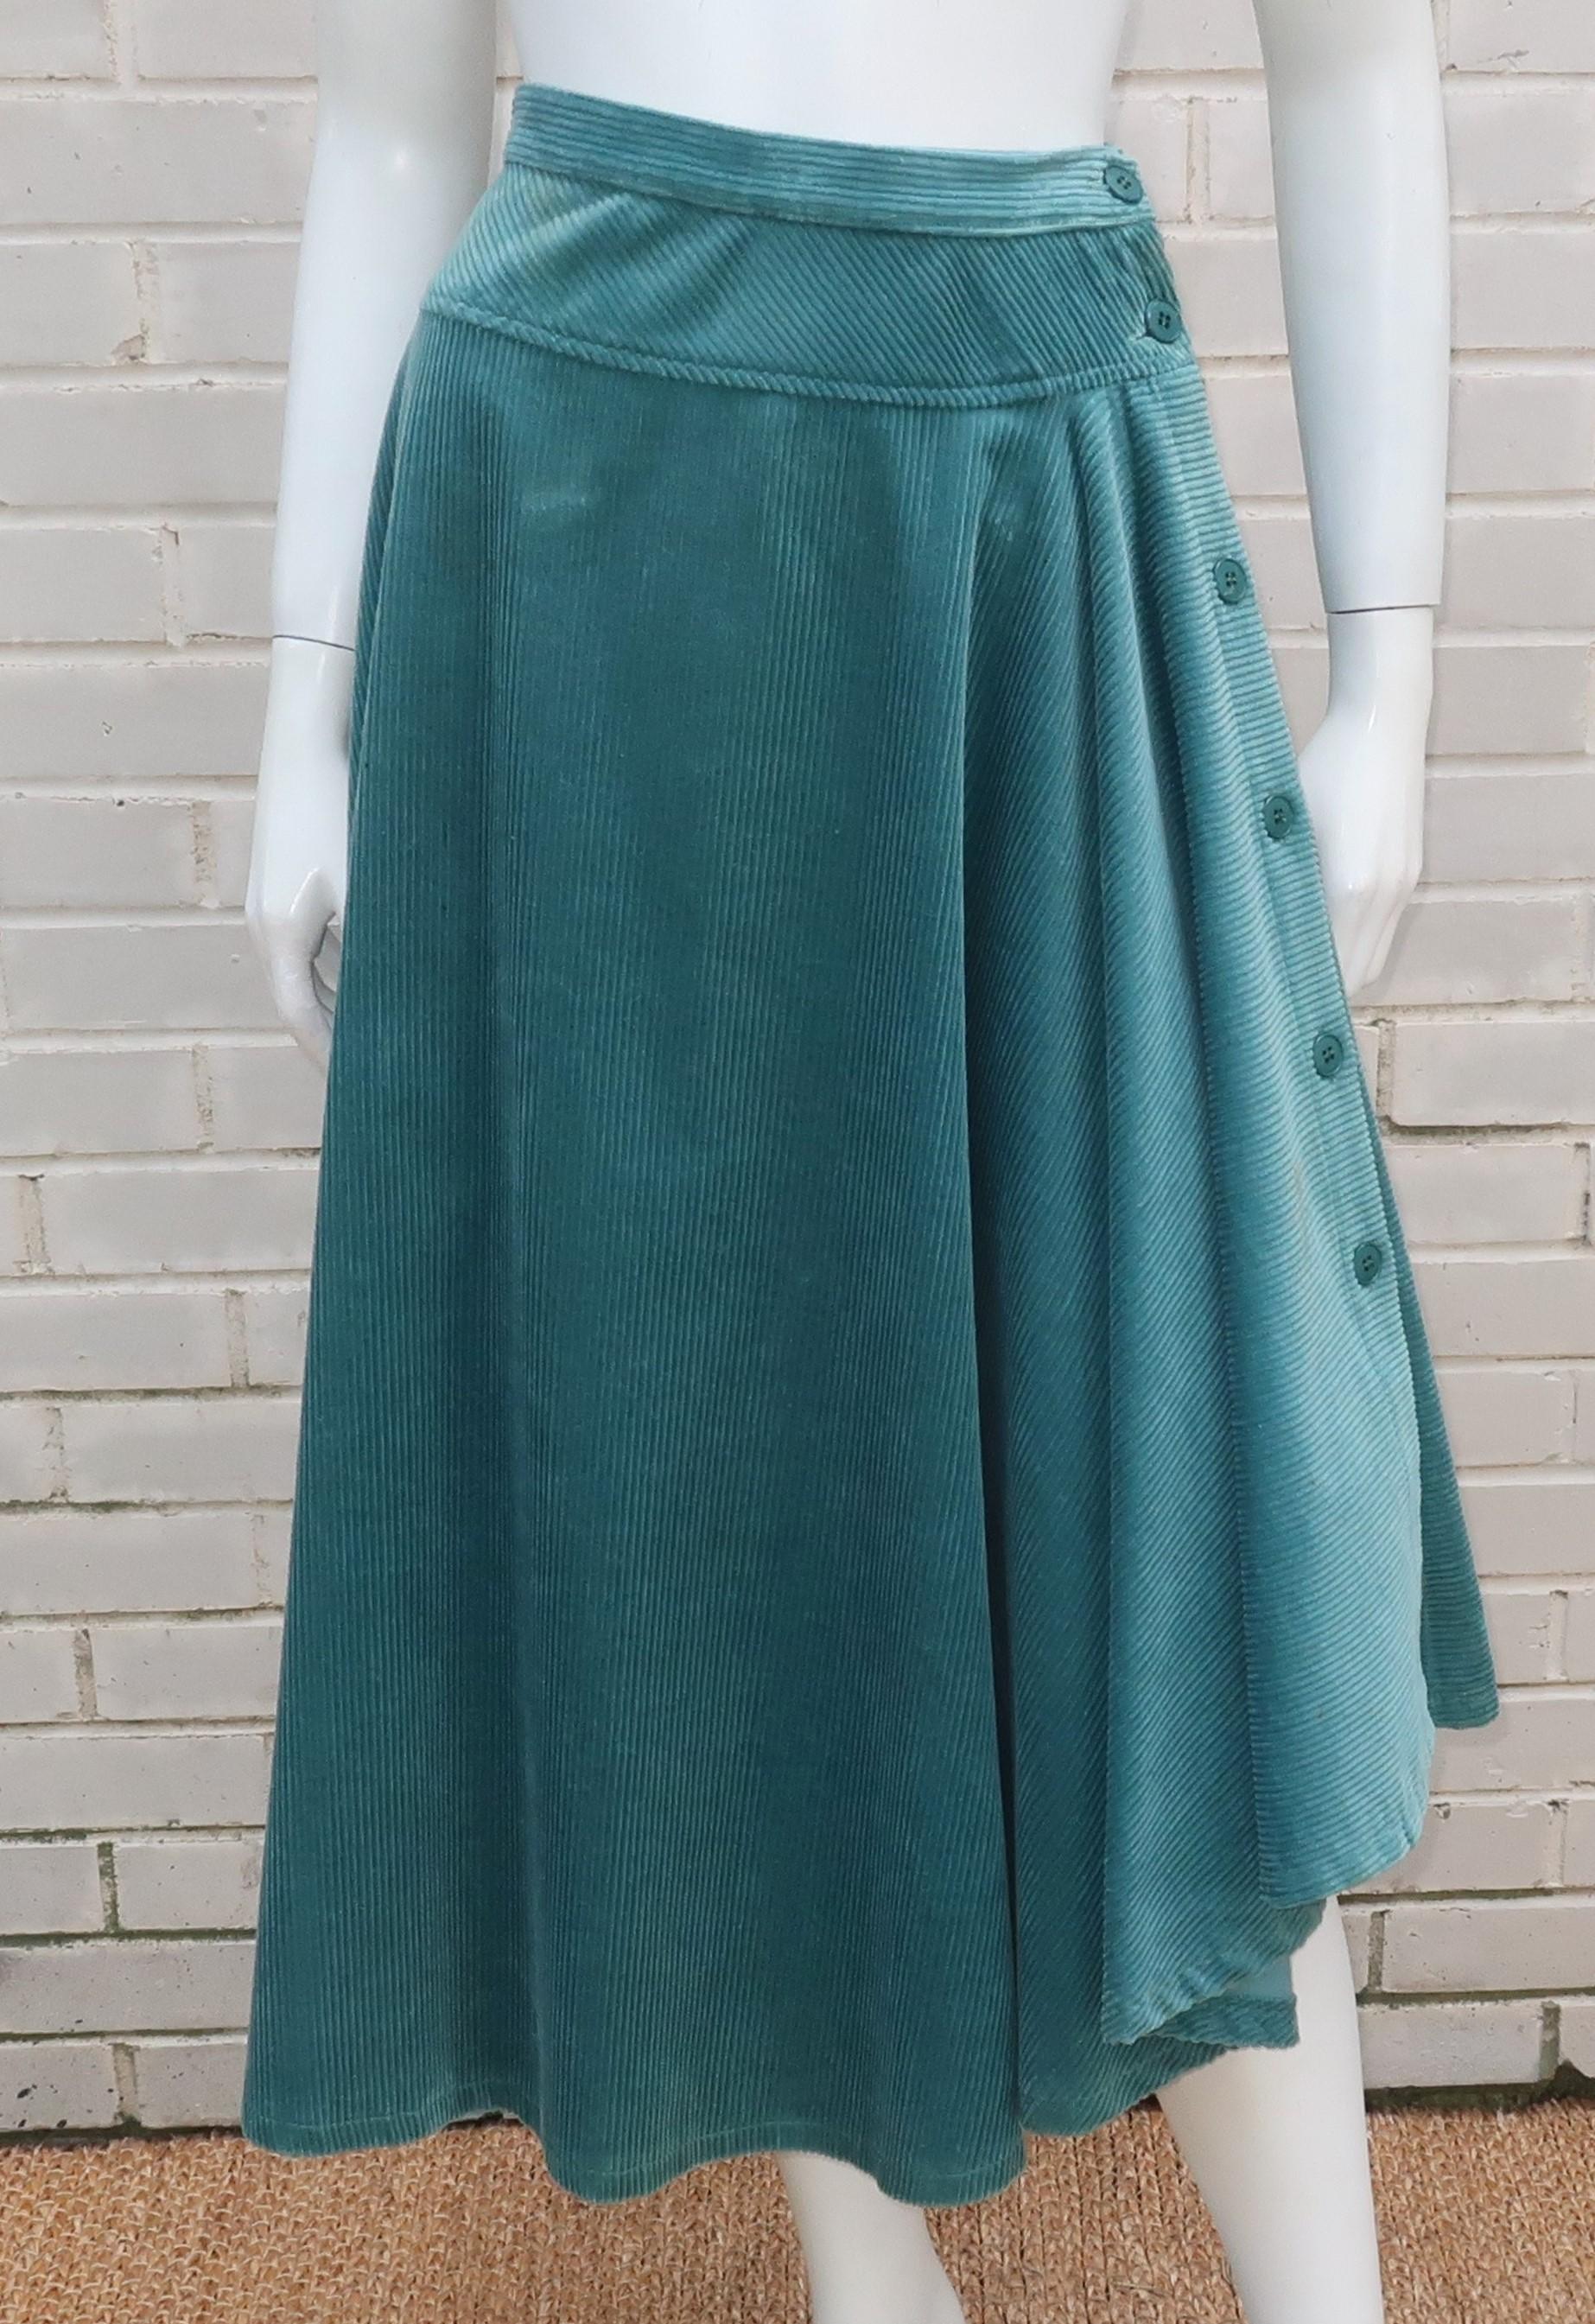 needlecord skirt